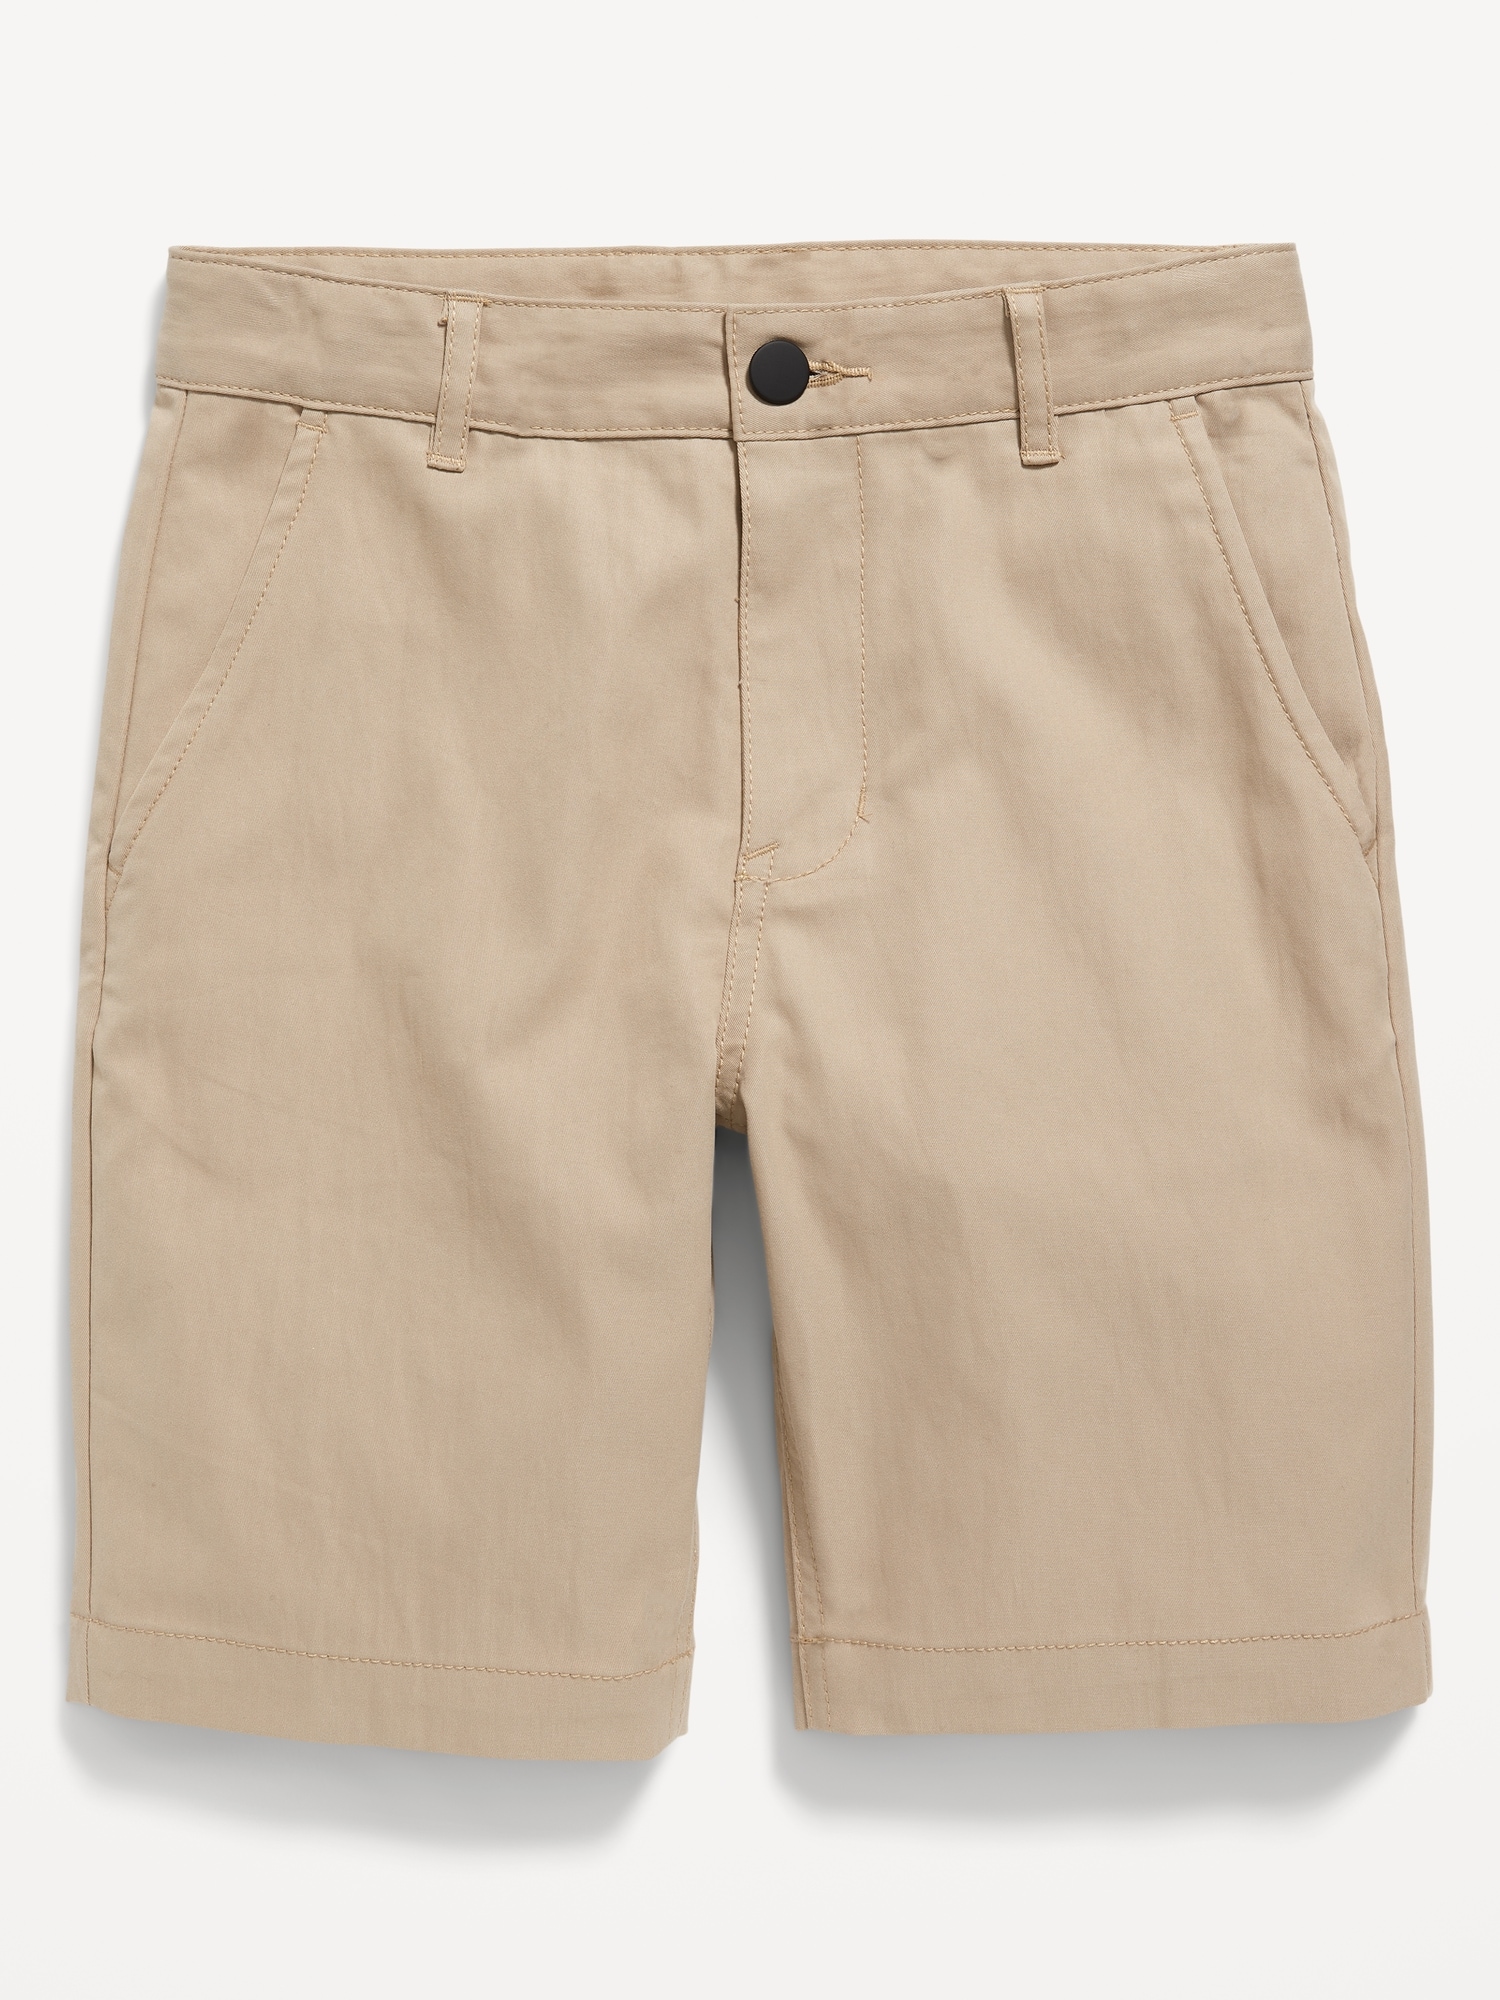 Straight Built-In Flex Tech Twill Uniform Shorts for Boys (At Knee)